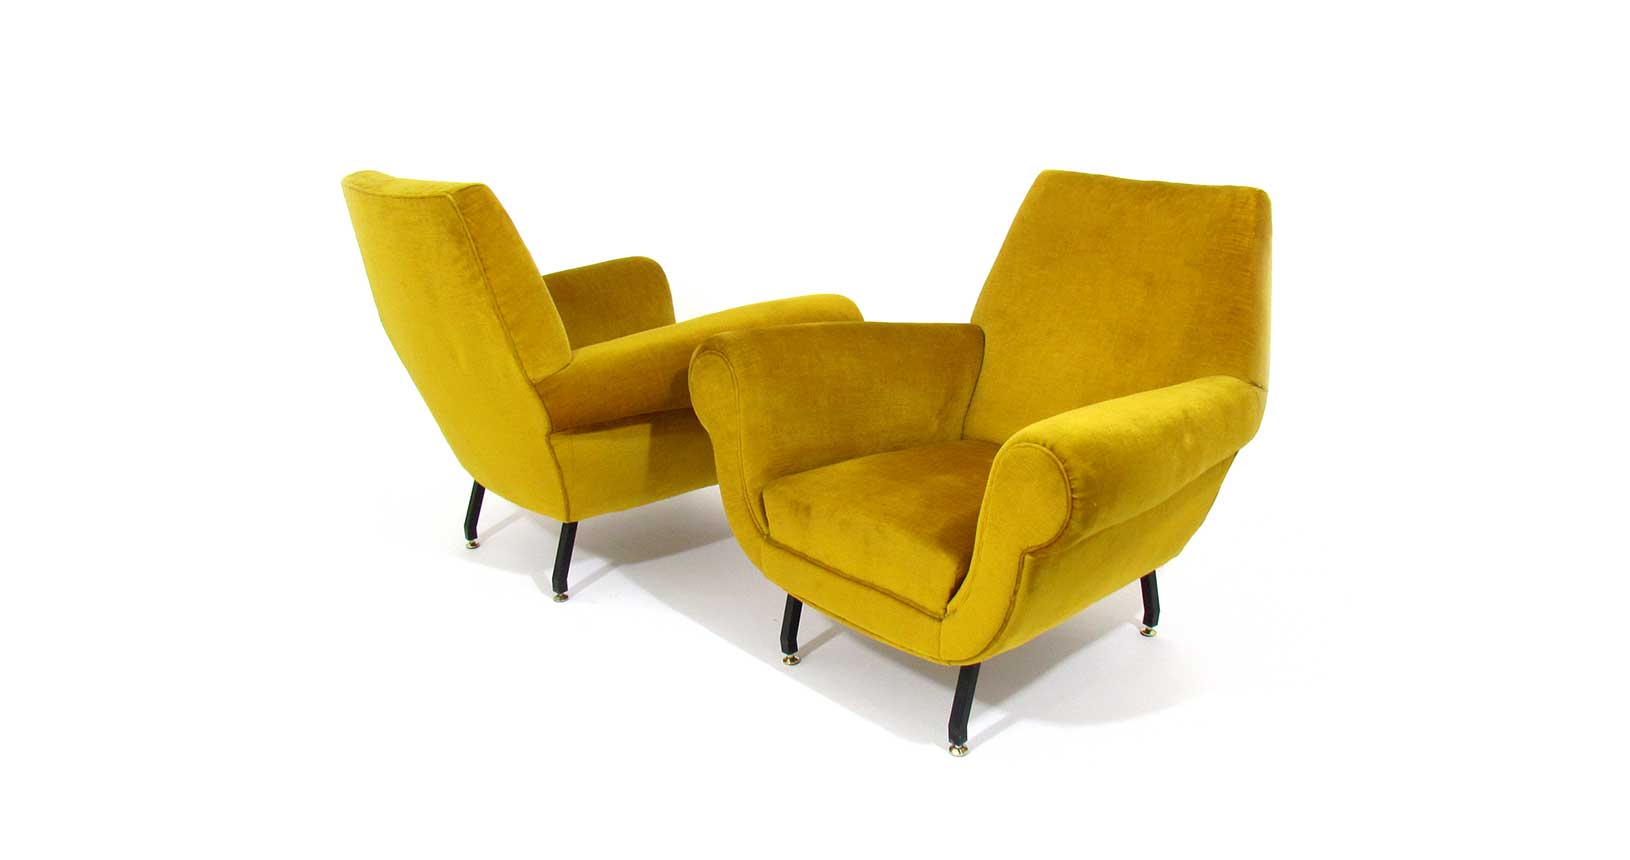 gigi radice armchair poltrona Minotti iron legs vintage iconic design furniture